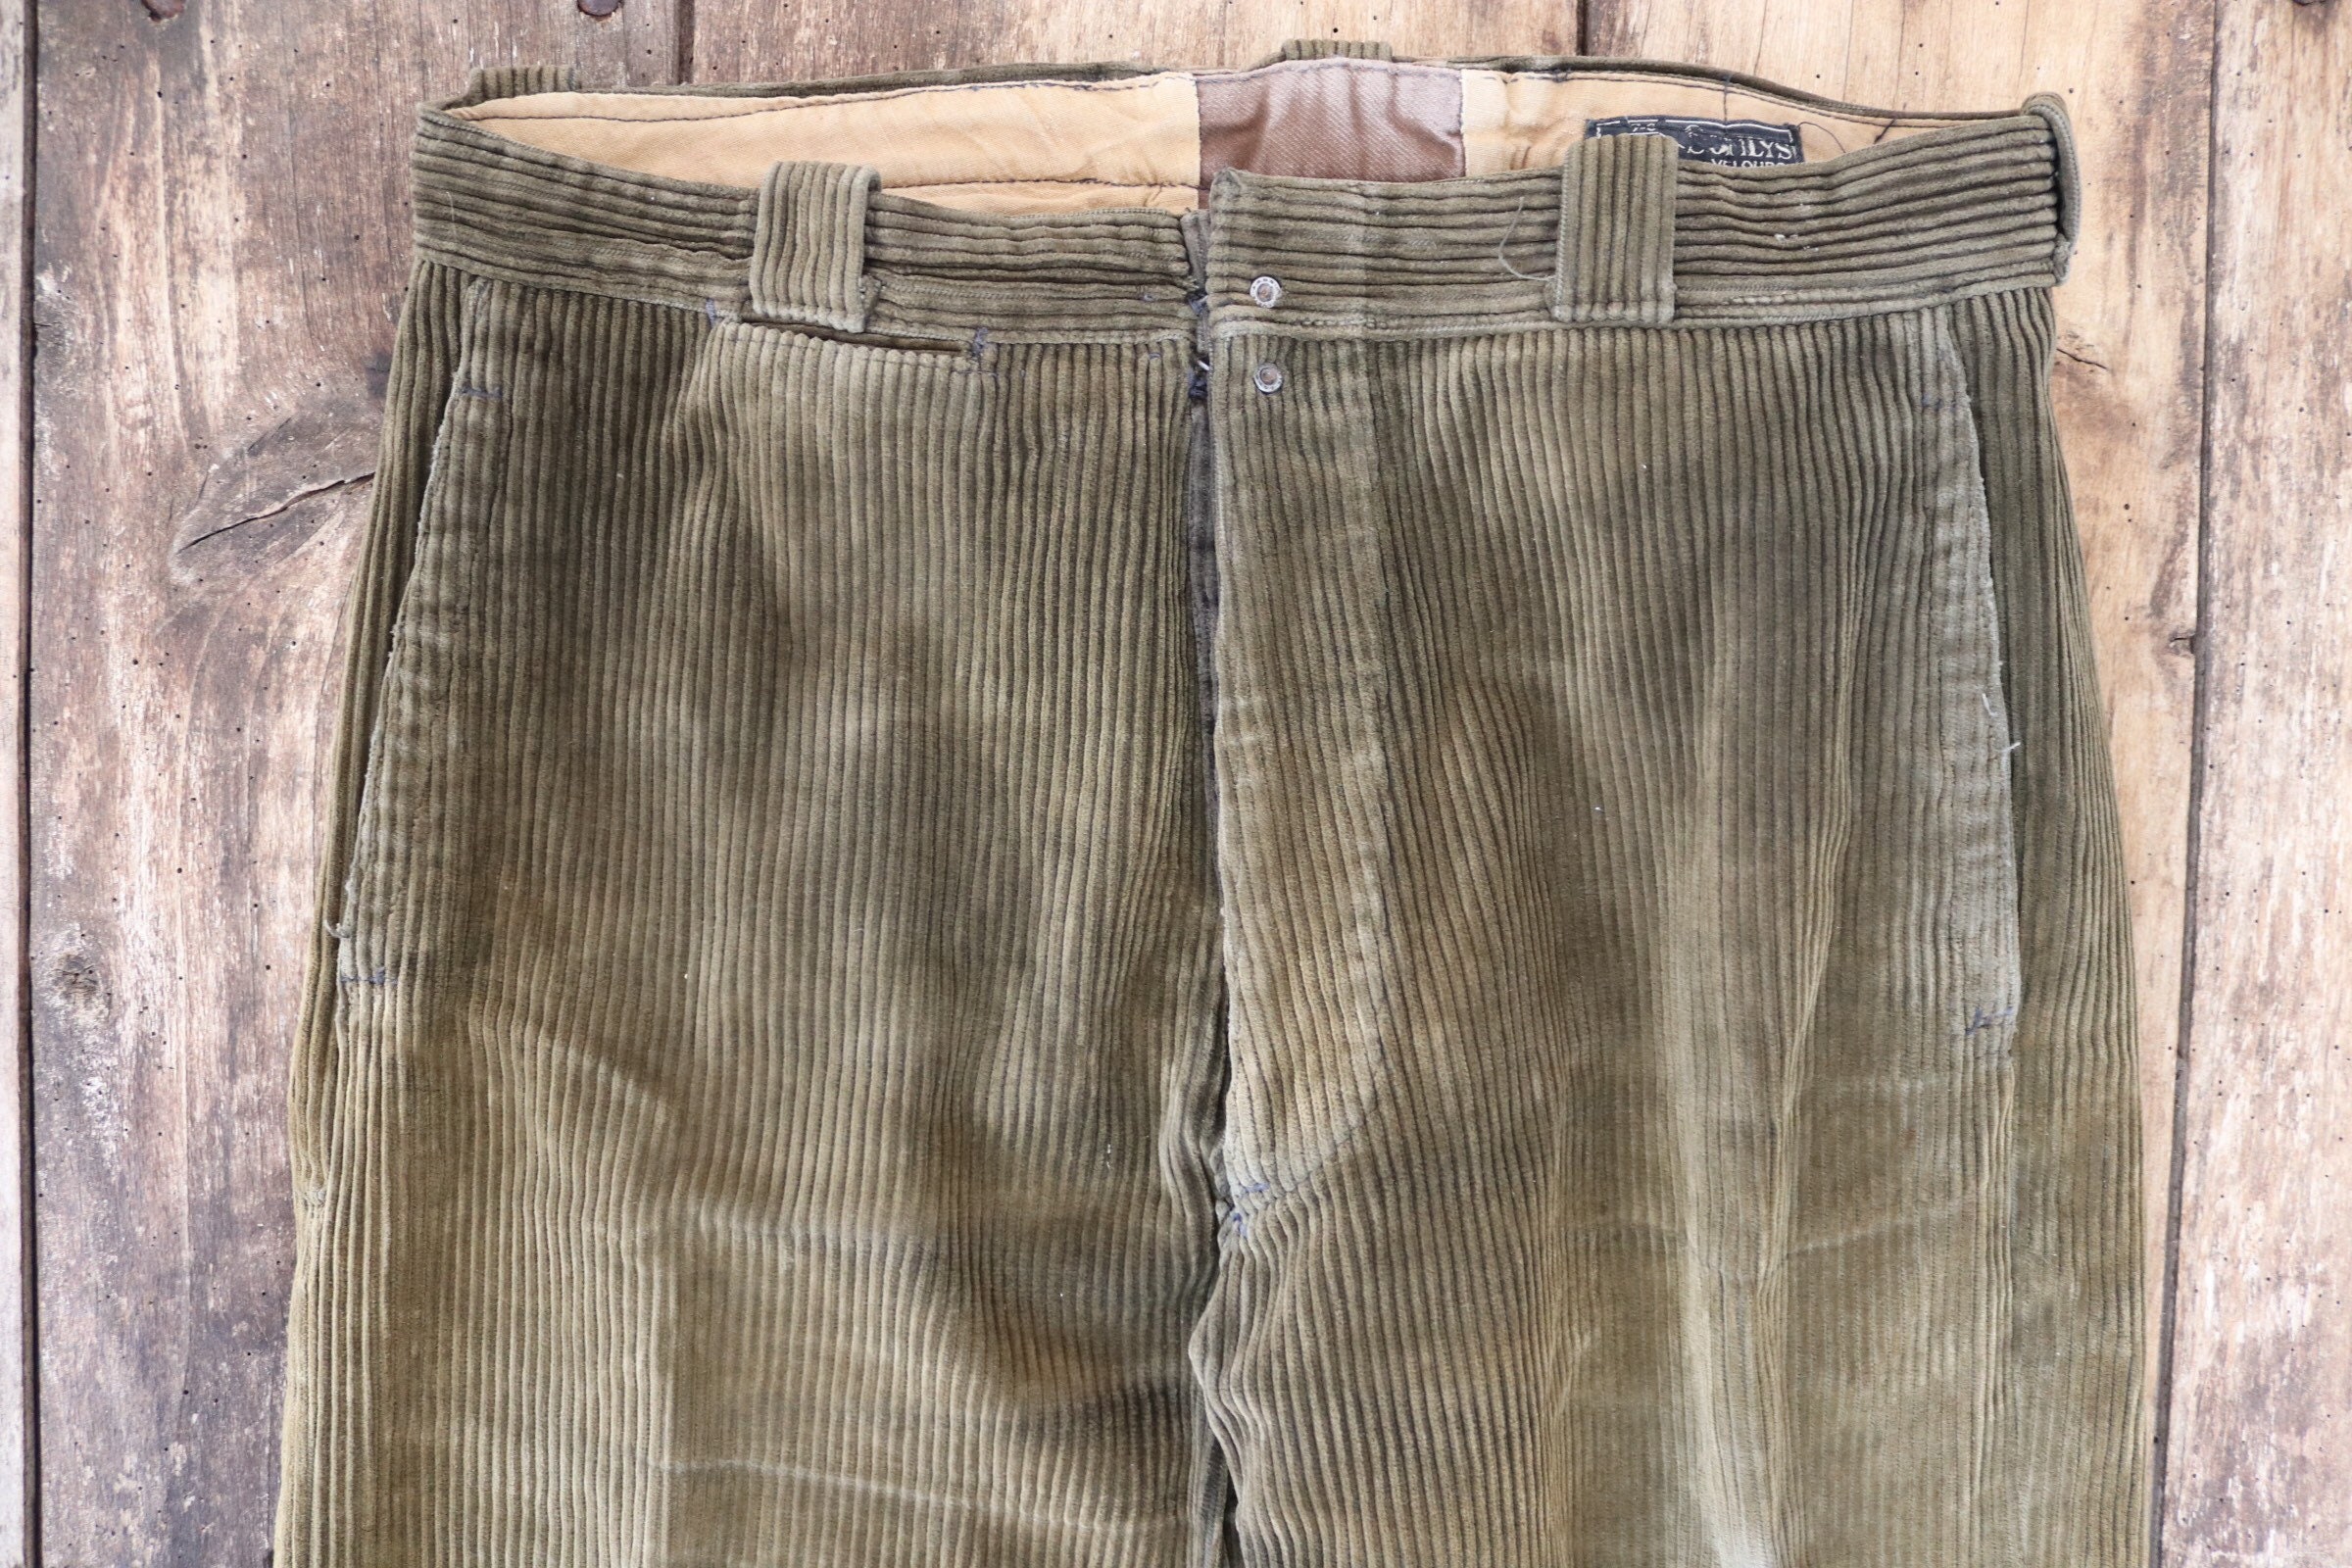 Vintage french khaki green brown corduroy trousers pants workwear chore ...